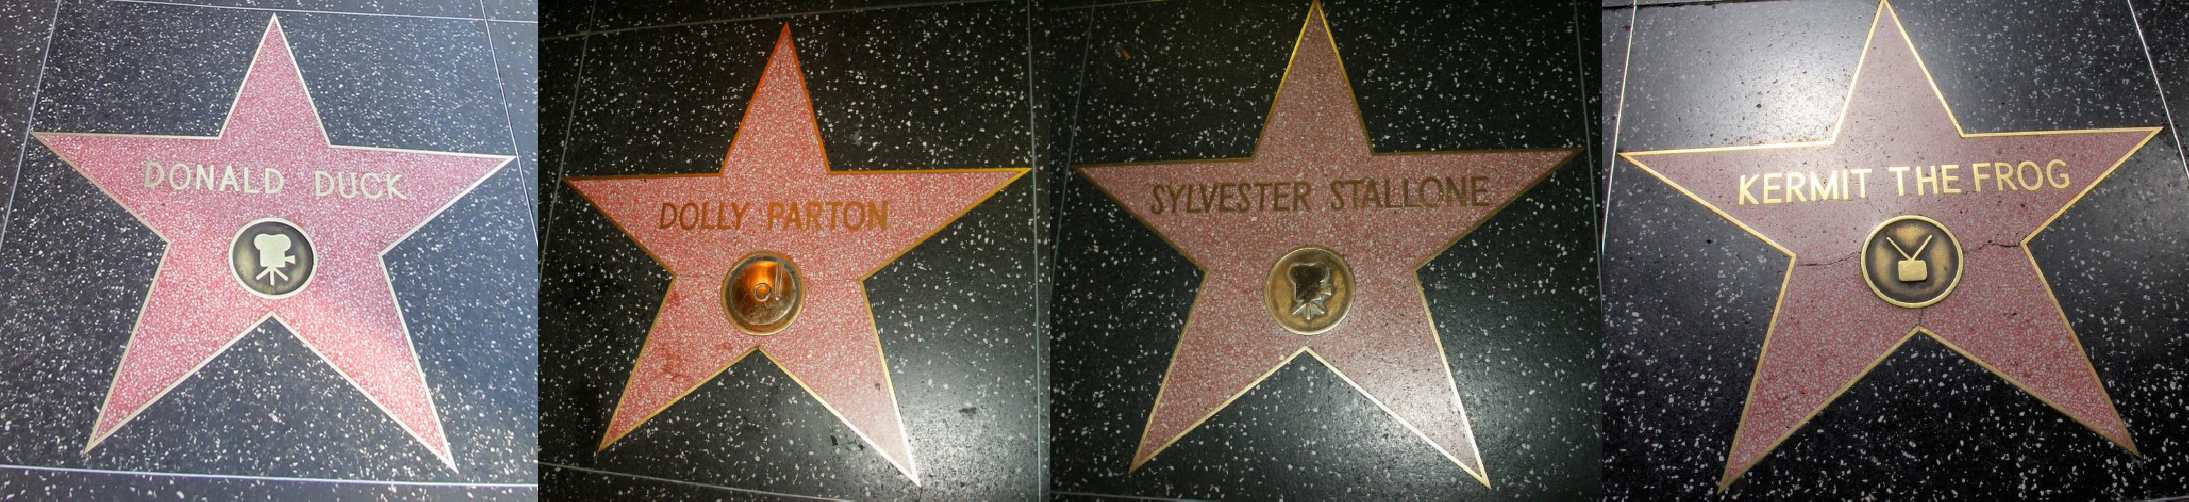 image of hollywood stars